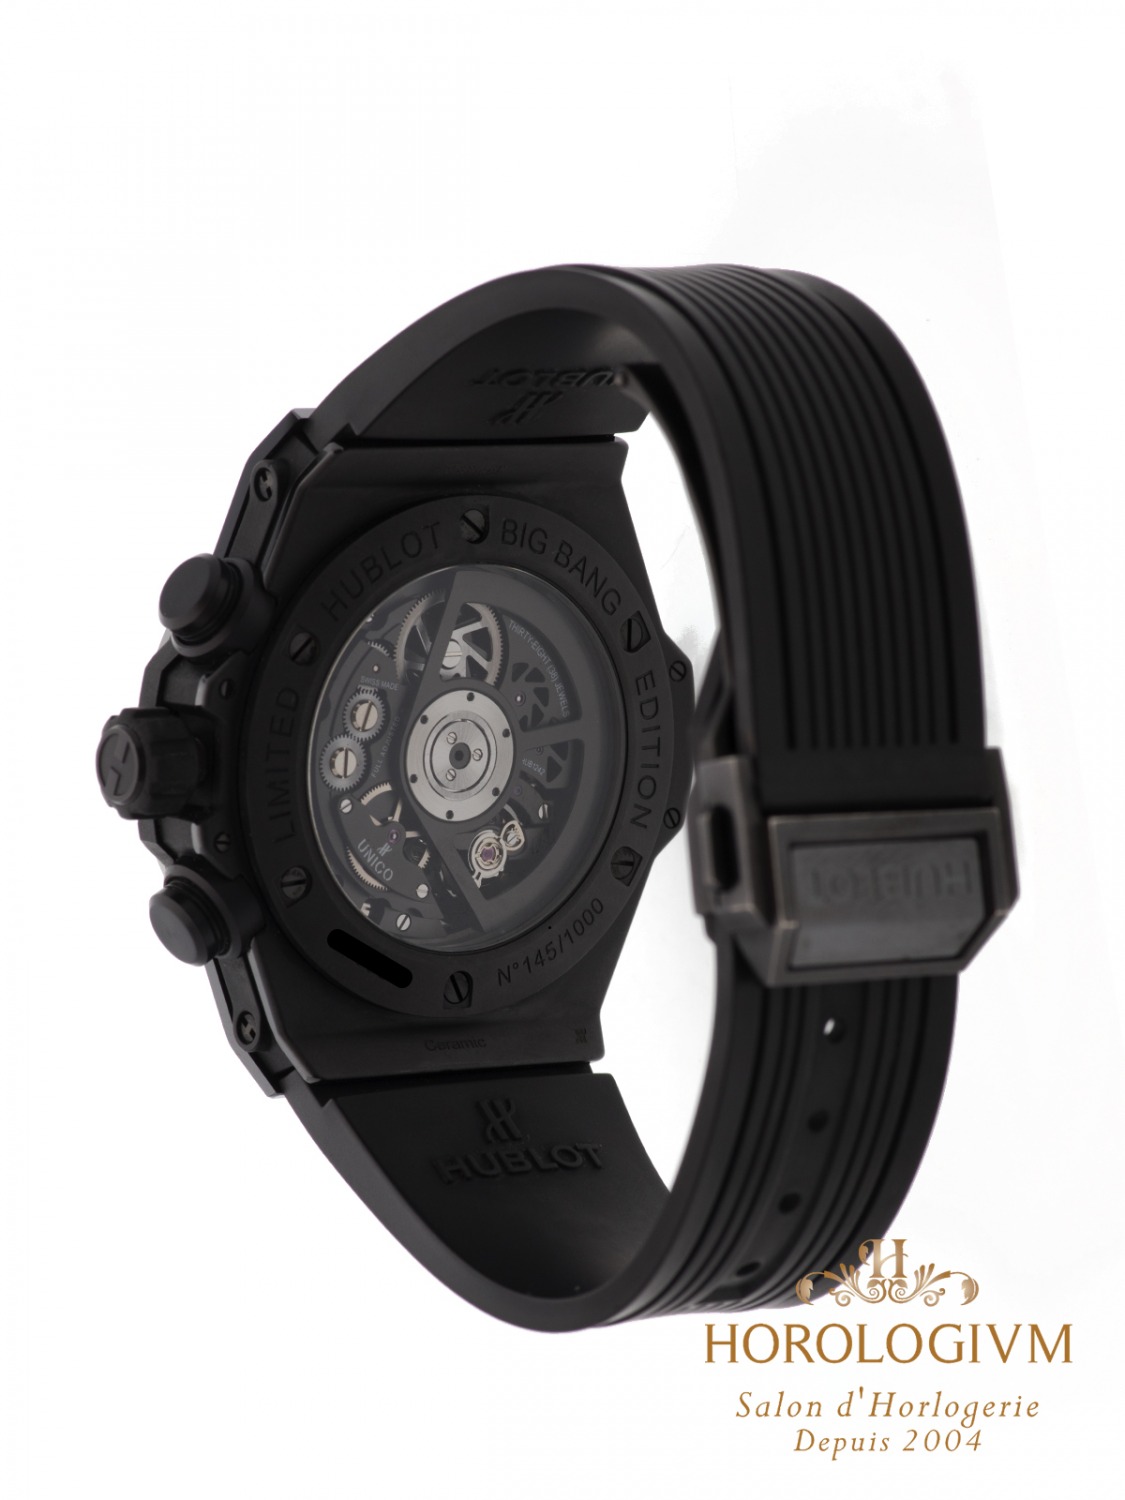 Hublot Big Bang Ceramic UNICO 45MM Ref. 411.CI.1110.RX Limited Edition 1000 pcs watch, brushed black